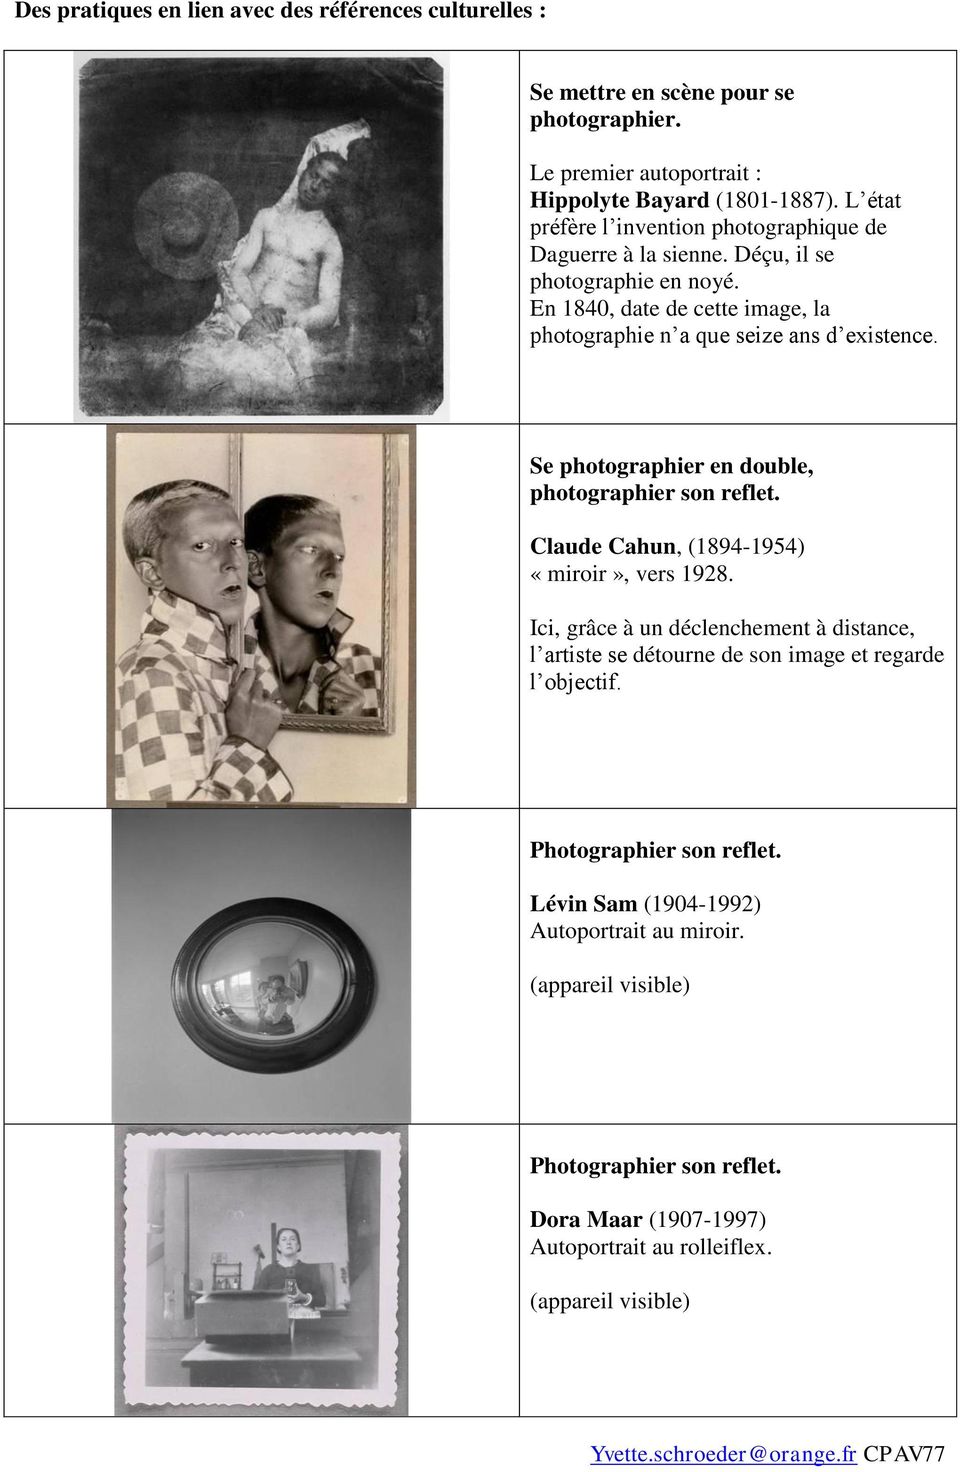 Se photographier en double, photographier son reflet. Claude Cahun, (1894-1954) «miroir», vers 1928.